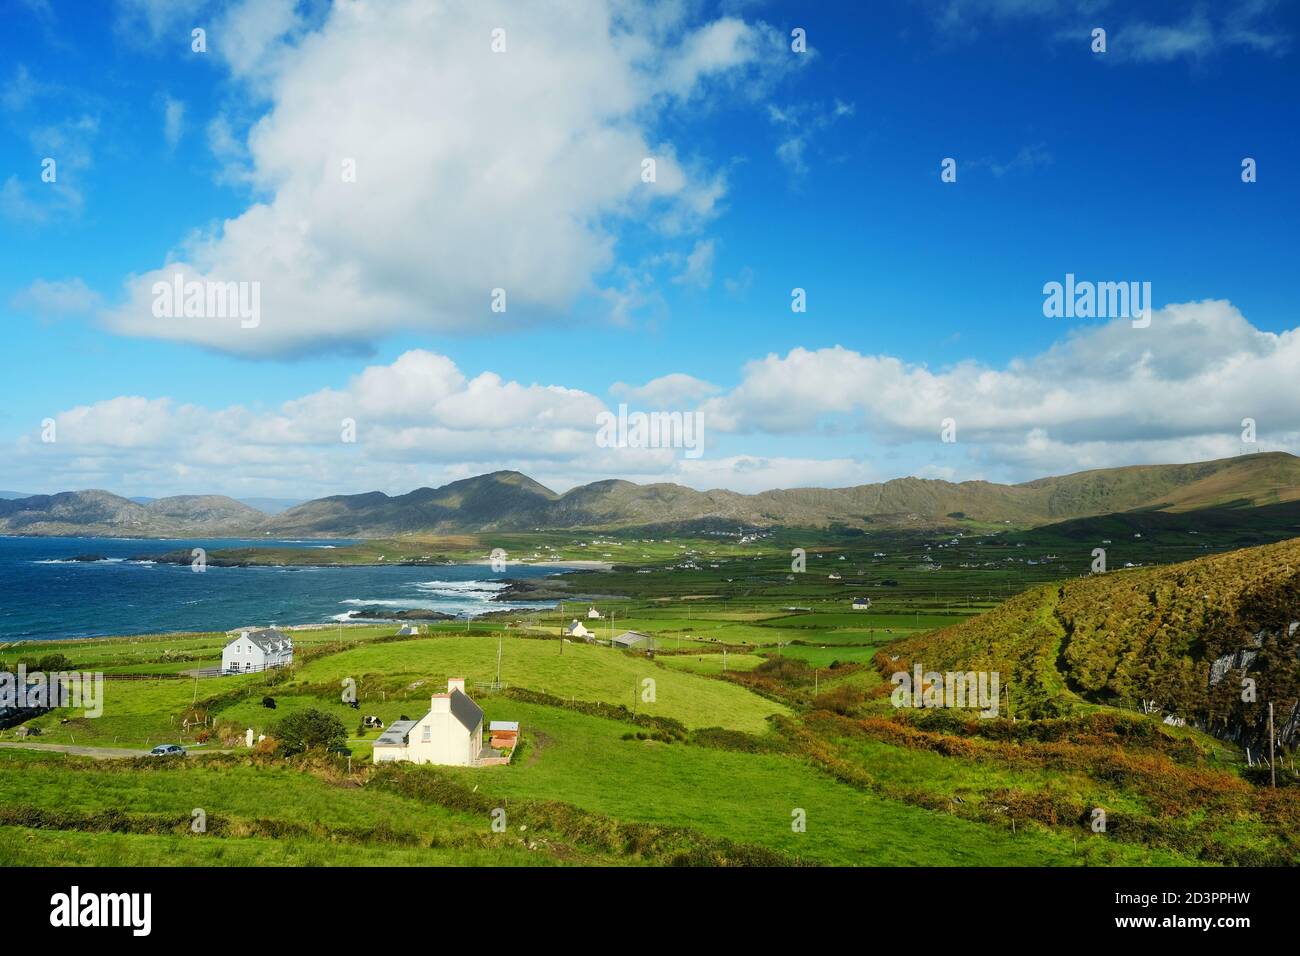 Looking towards Allihies on the west of the Beara Peninsula, County Cork, Ireland - John Gollop Stock Photo